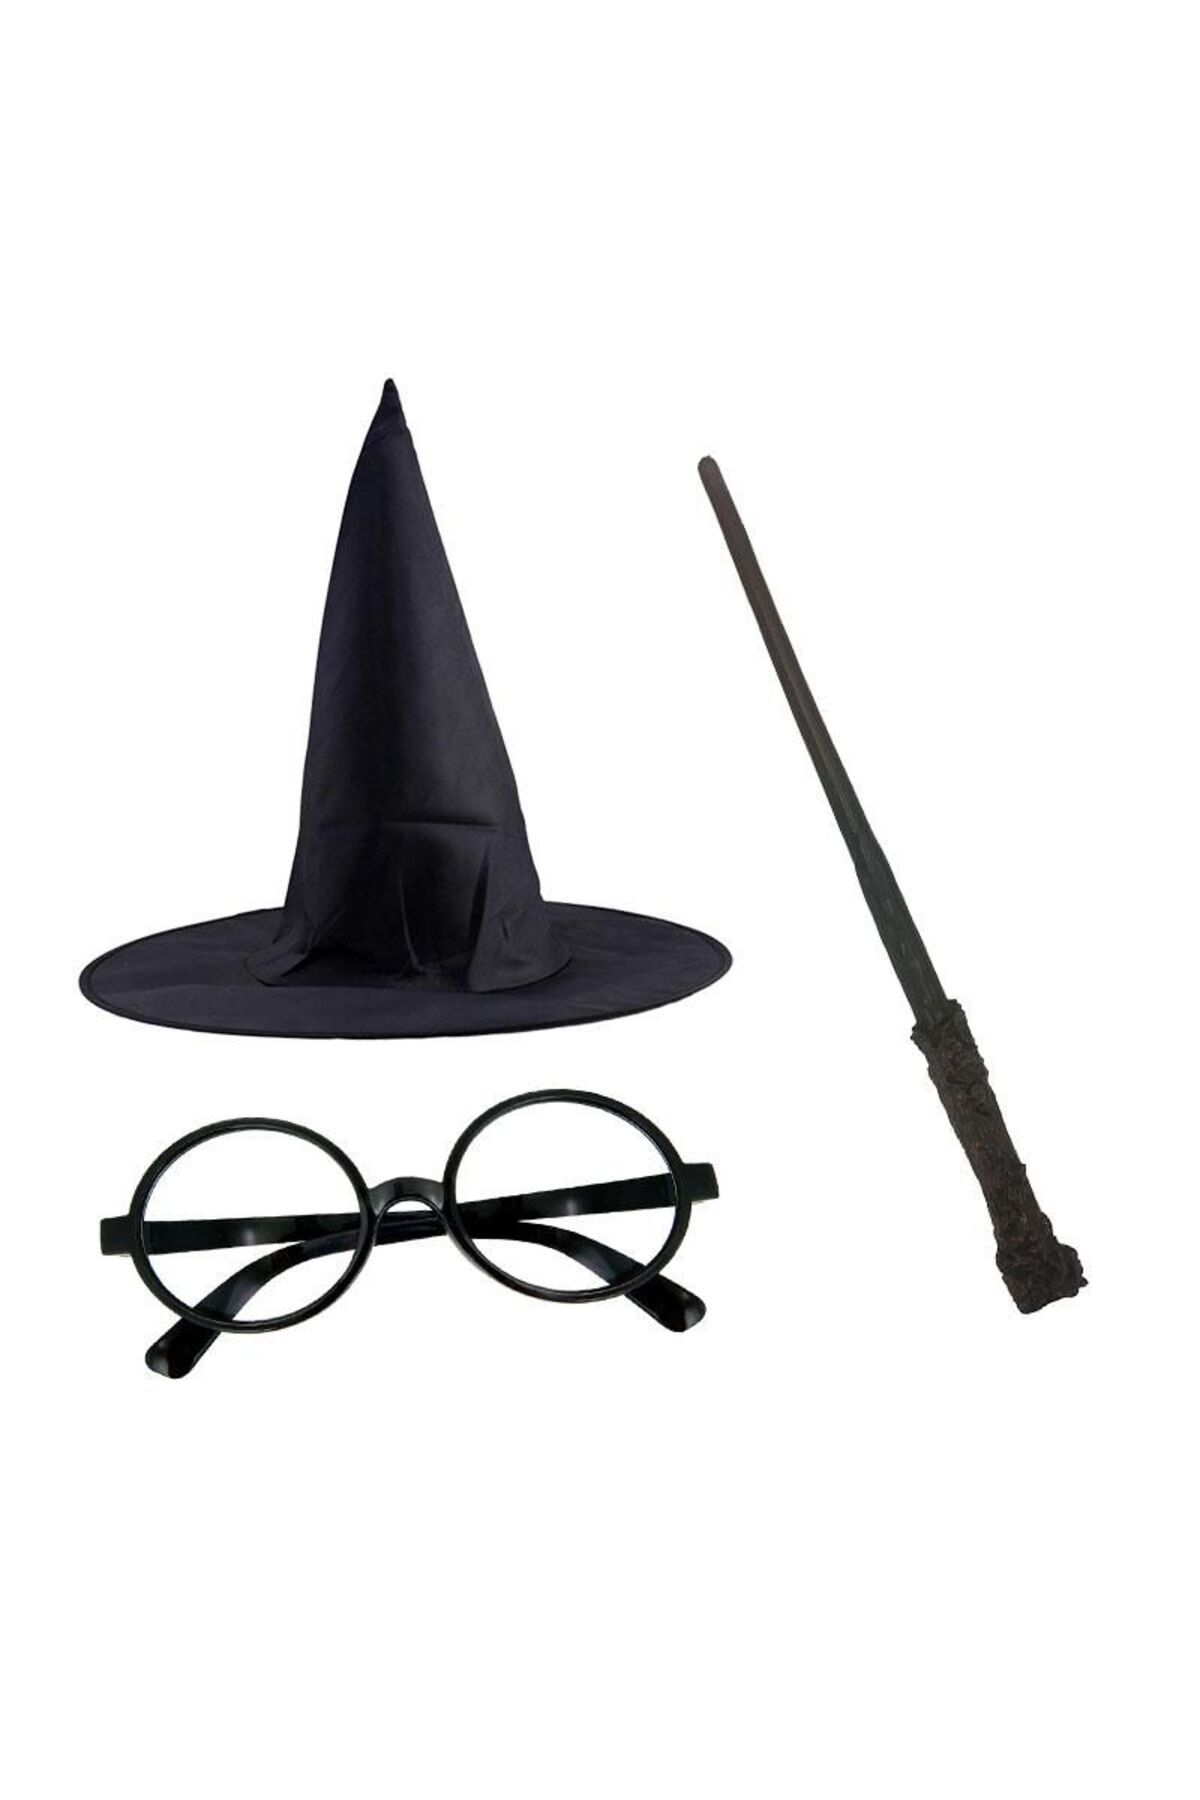 Skygo Harry Potter Siyah Şapkası Harry Potter Gözlüğü Harry Potter Asası 3 lü Set